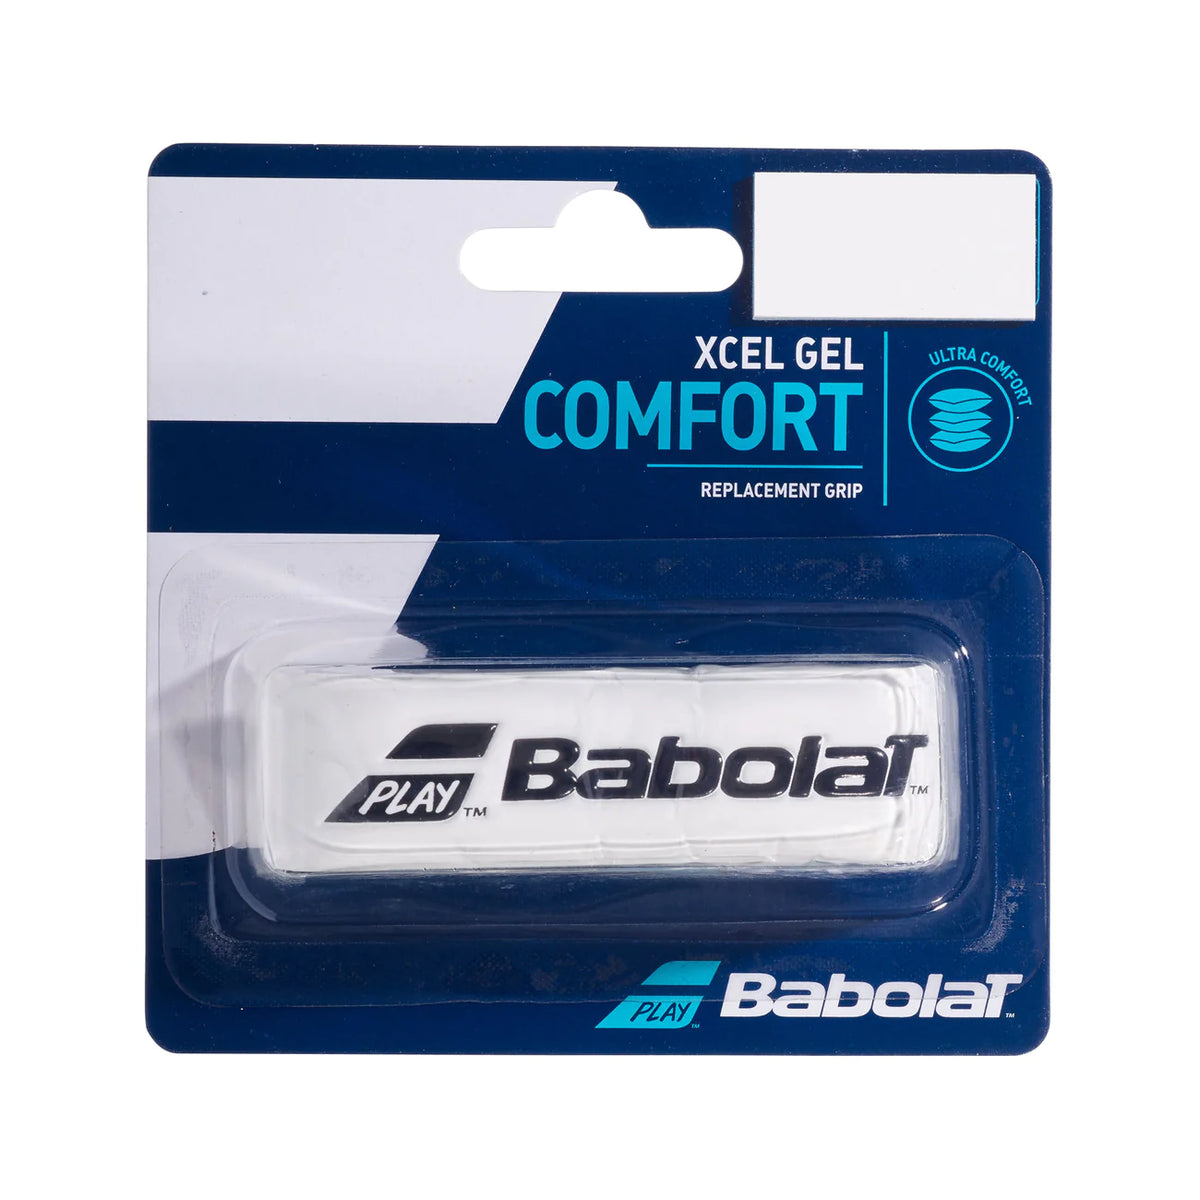 Babolat Xcel Gel Comfort Tennis Grips (White)